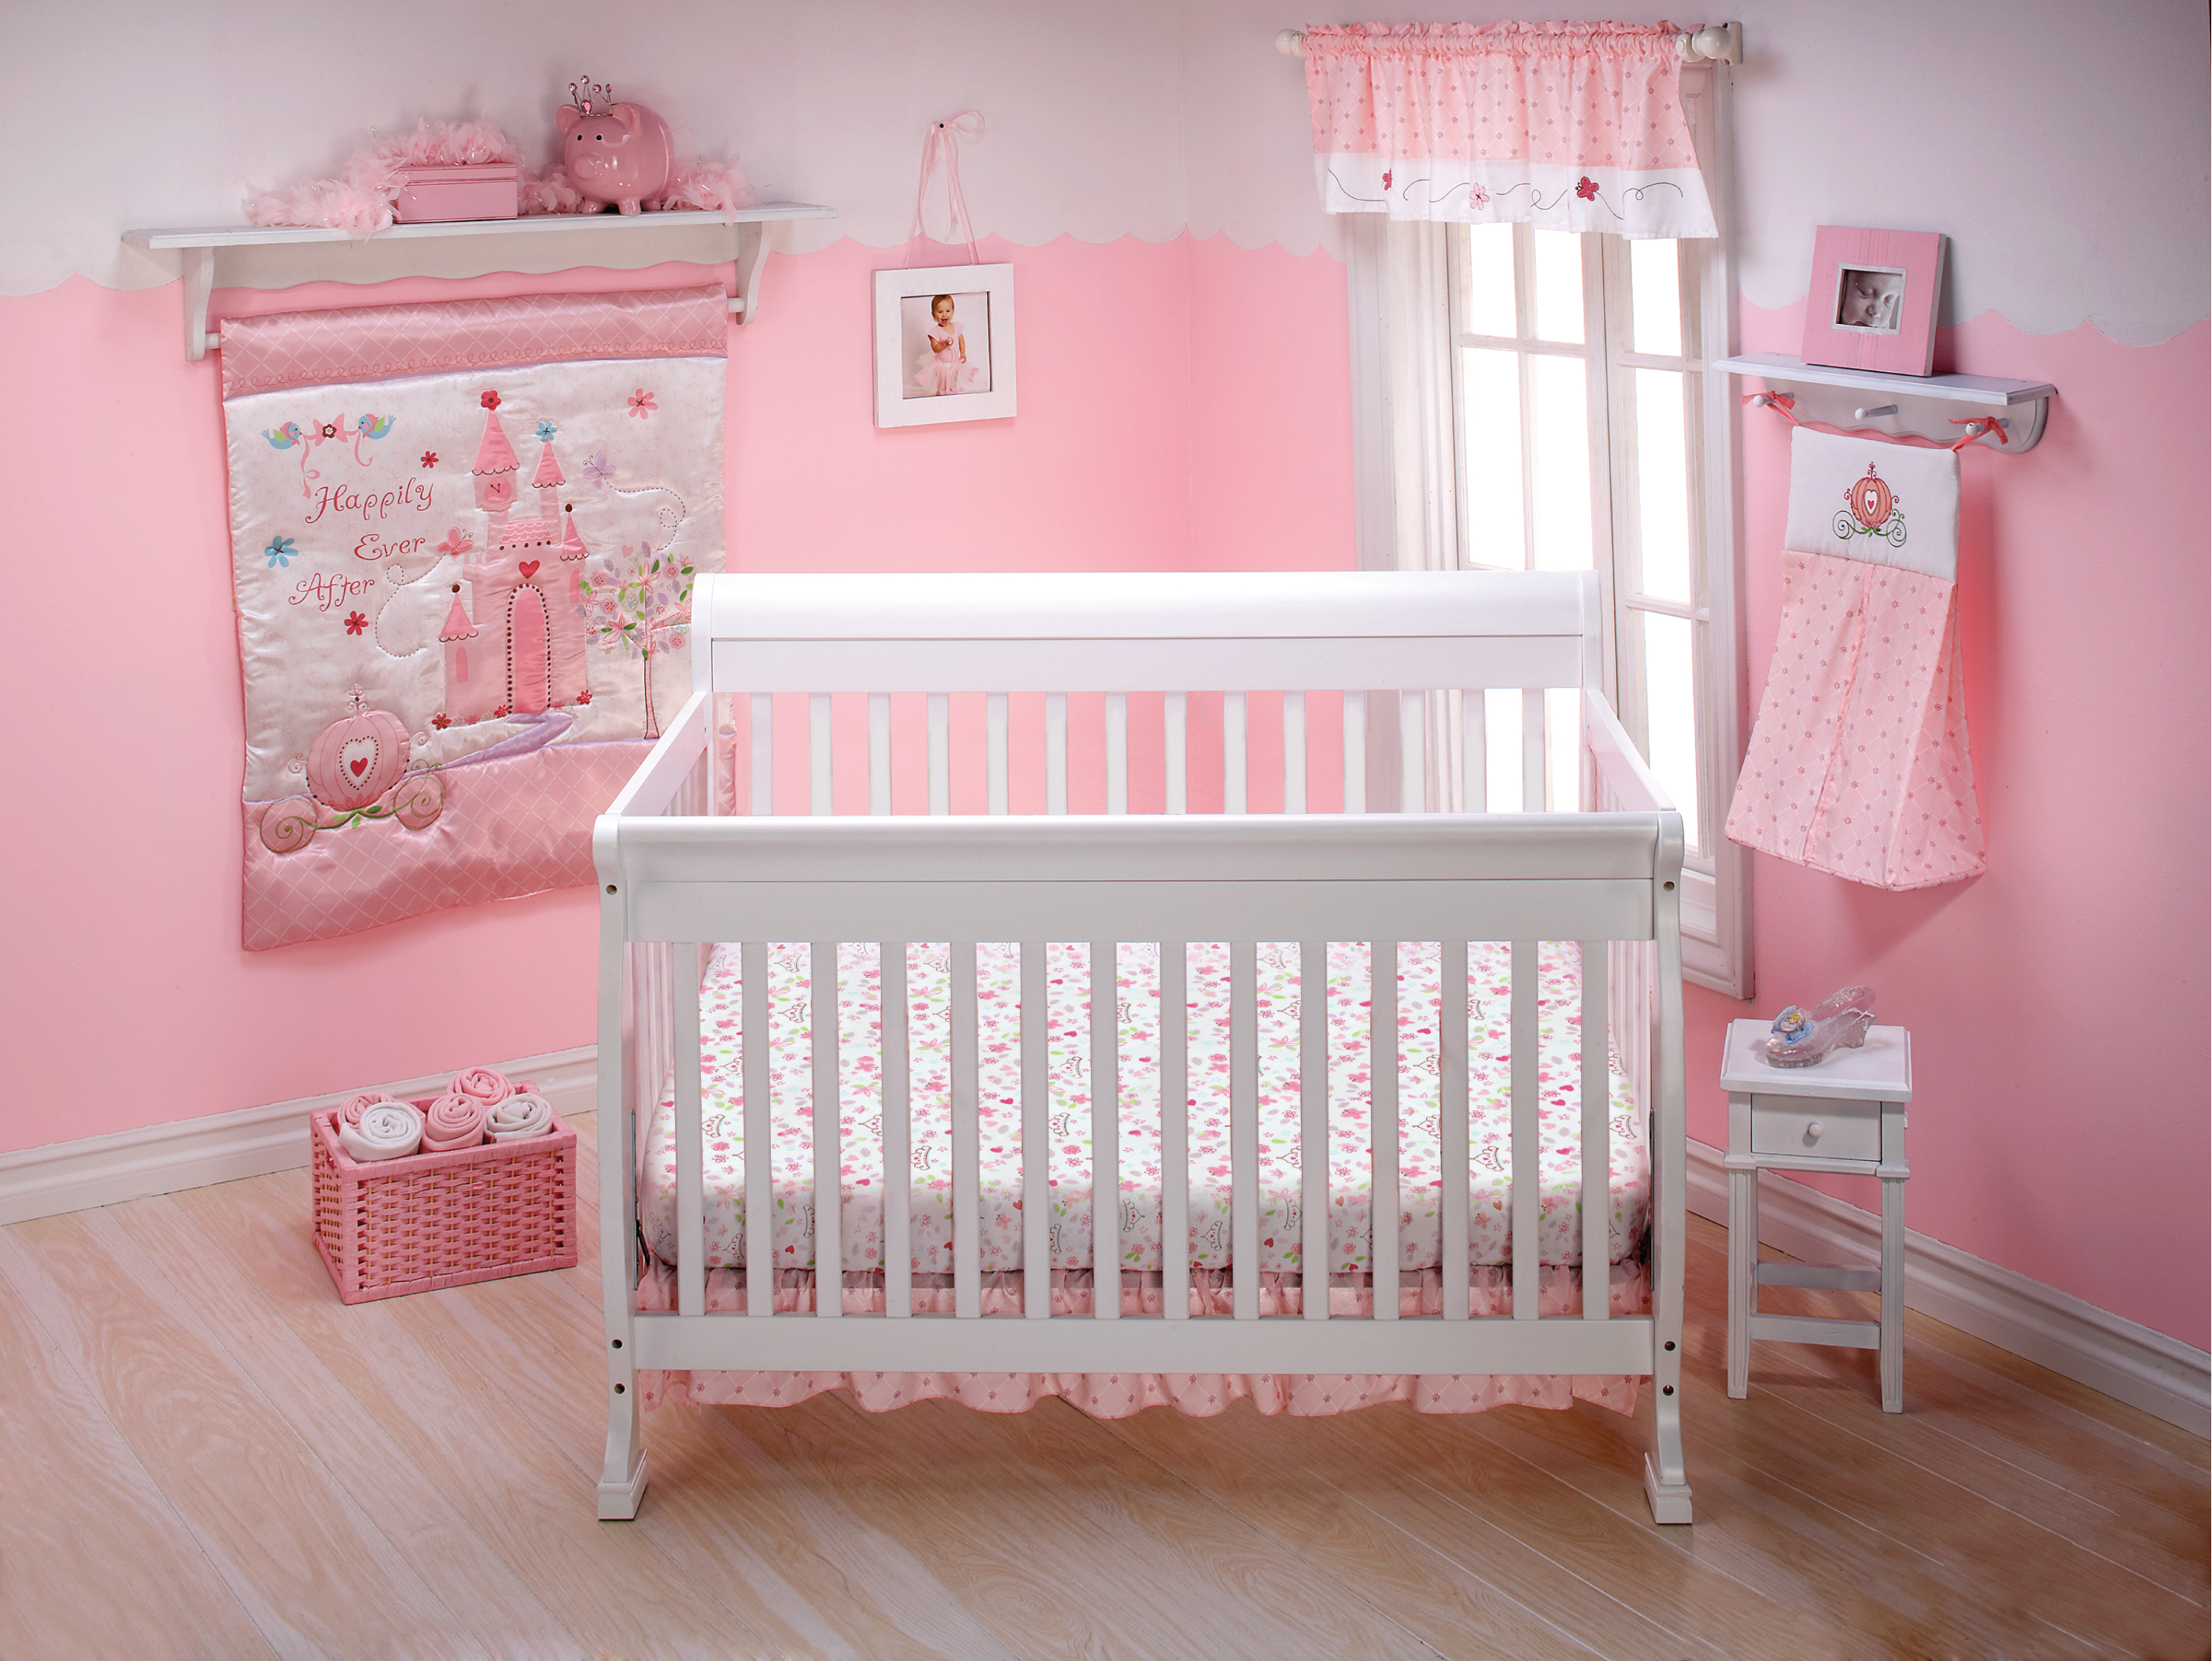 Disney Princess Happily Ever After 3 Piece Crib Bedding Set, Pink - image 1 of 5